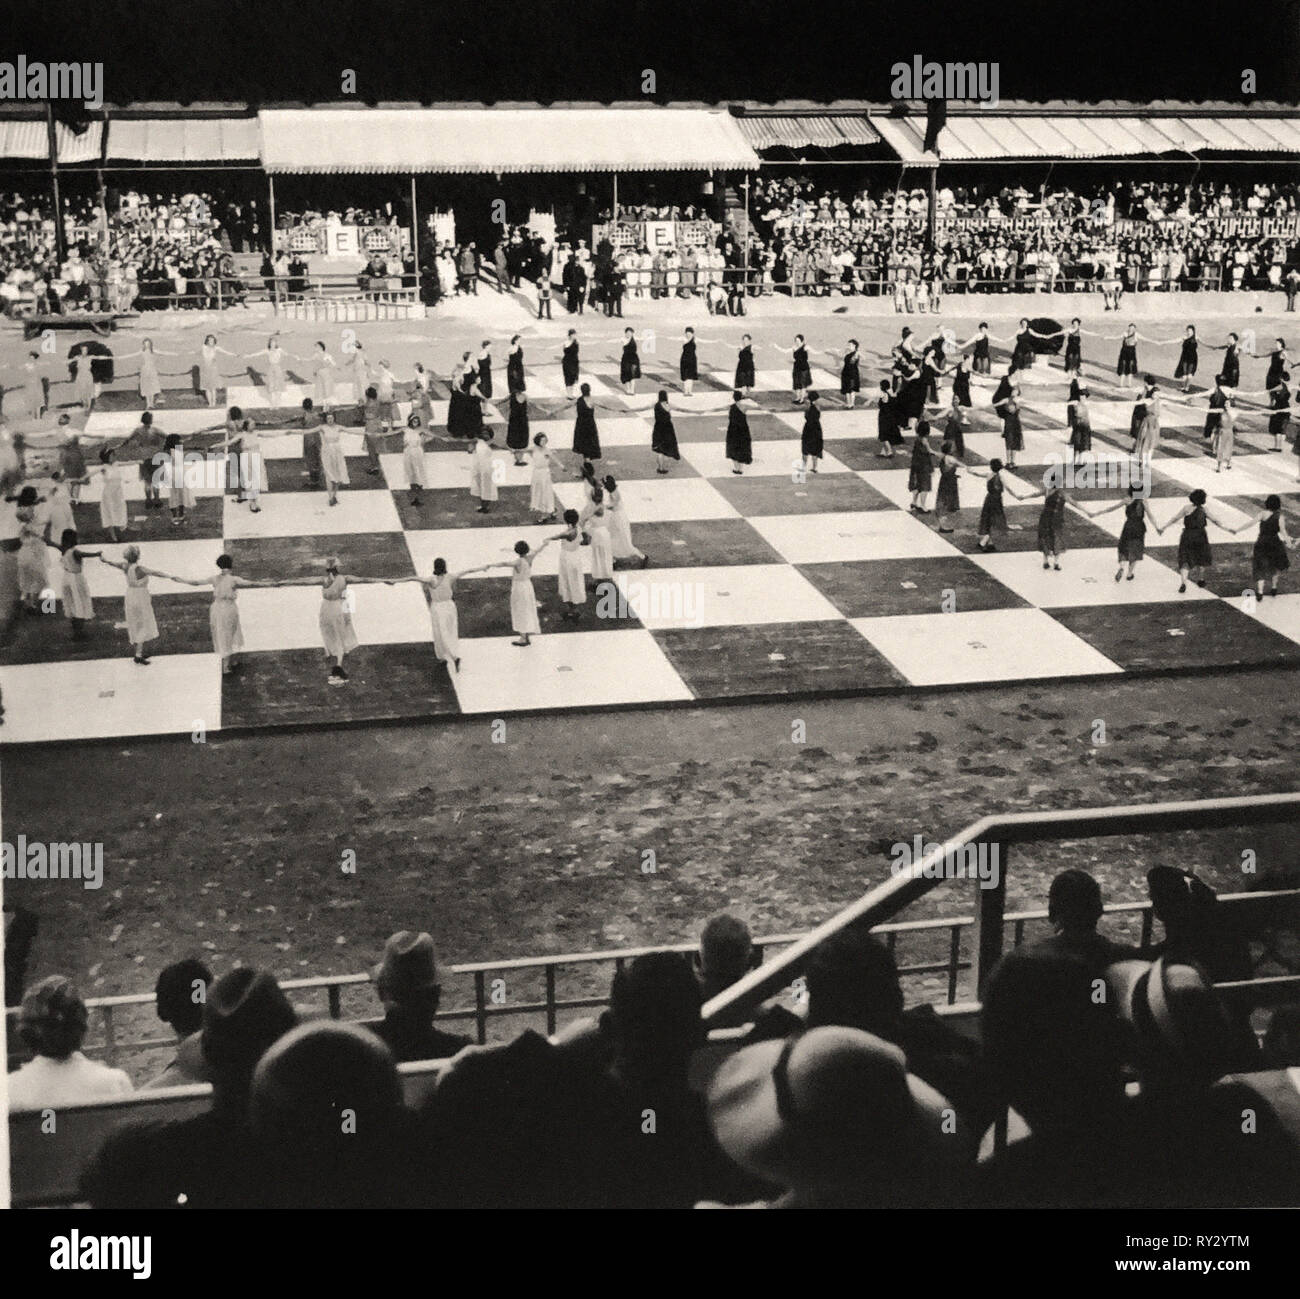 Olympischen Spielen 1936 Berlin - Schacholympiade in München während der Olympischen Spiele 1936 in Berlin. Stockfoto